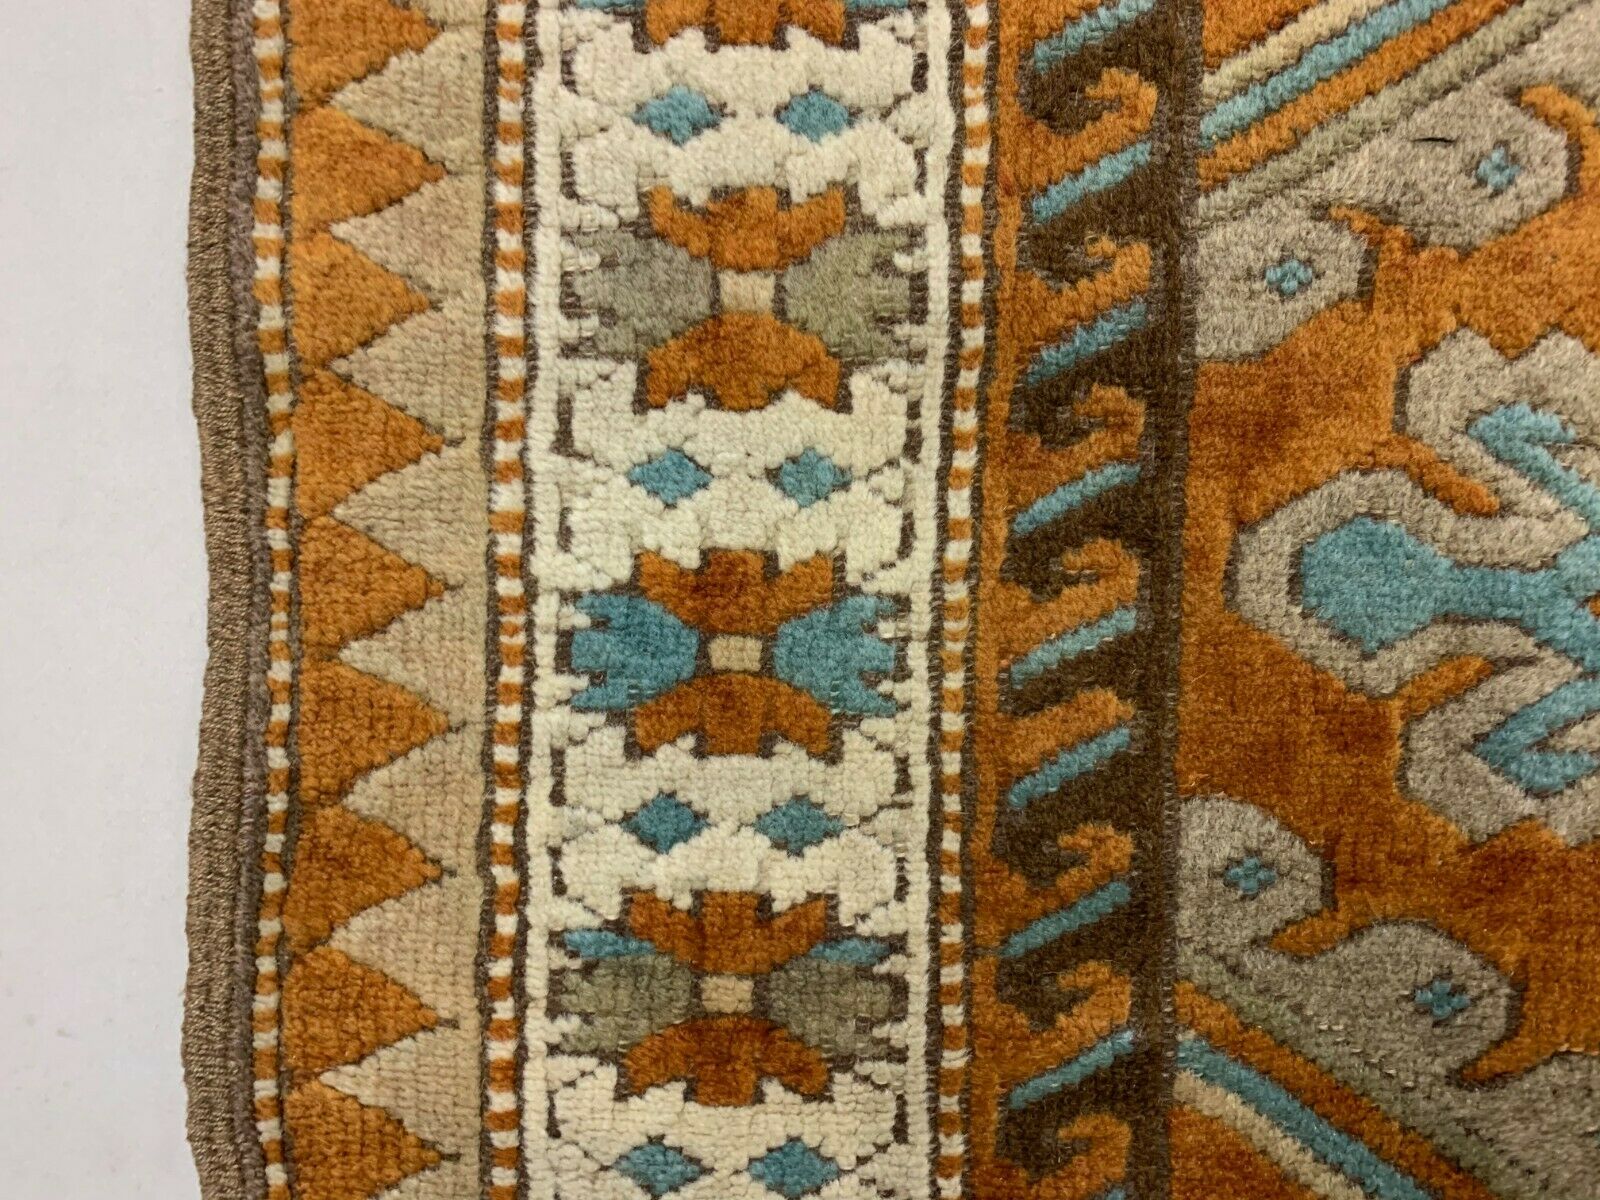 Old Turkish Rug 158x125 cm Vintage Oriental Rare Carpet Blue Brown Beige